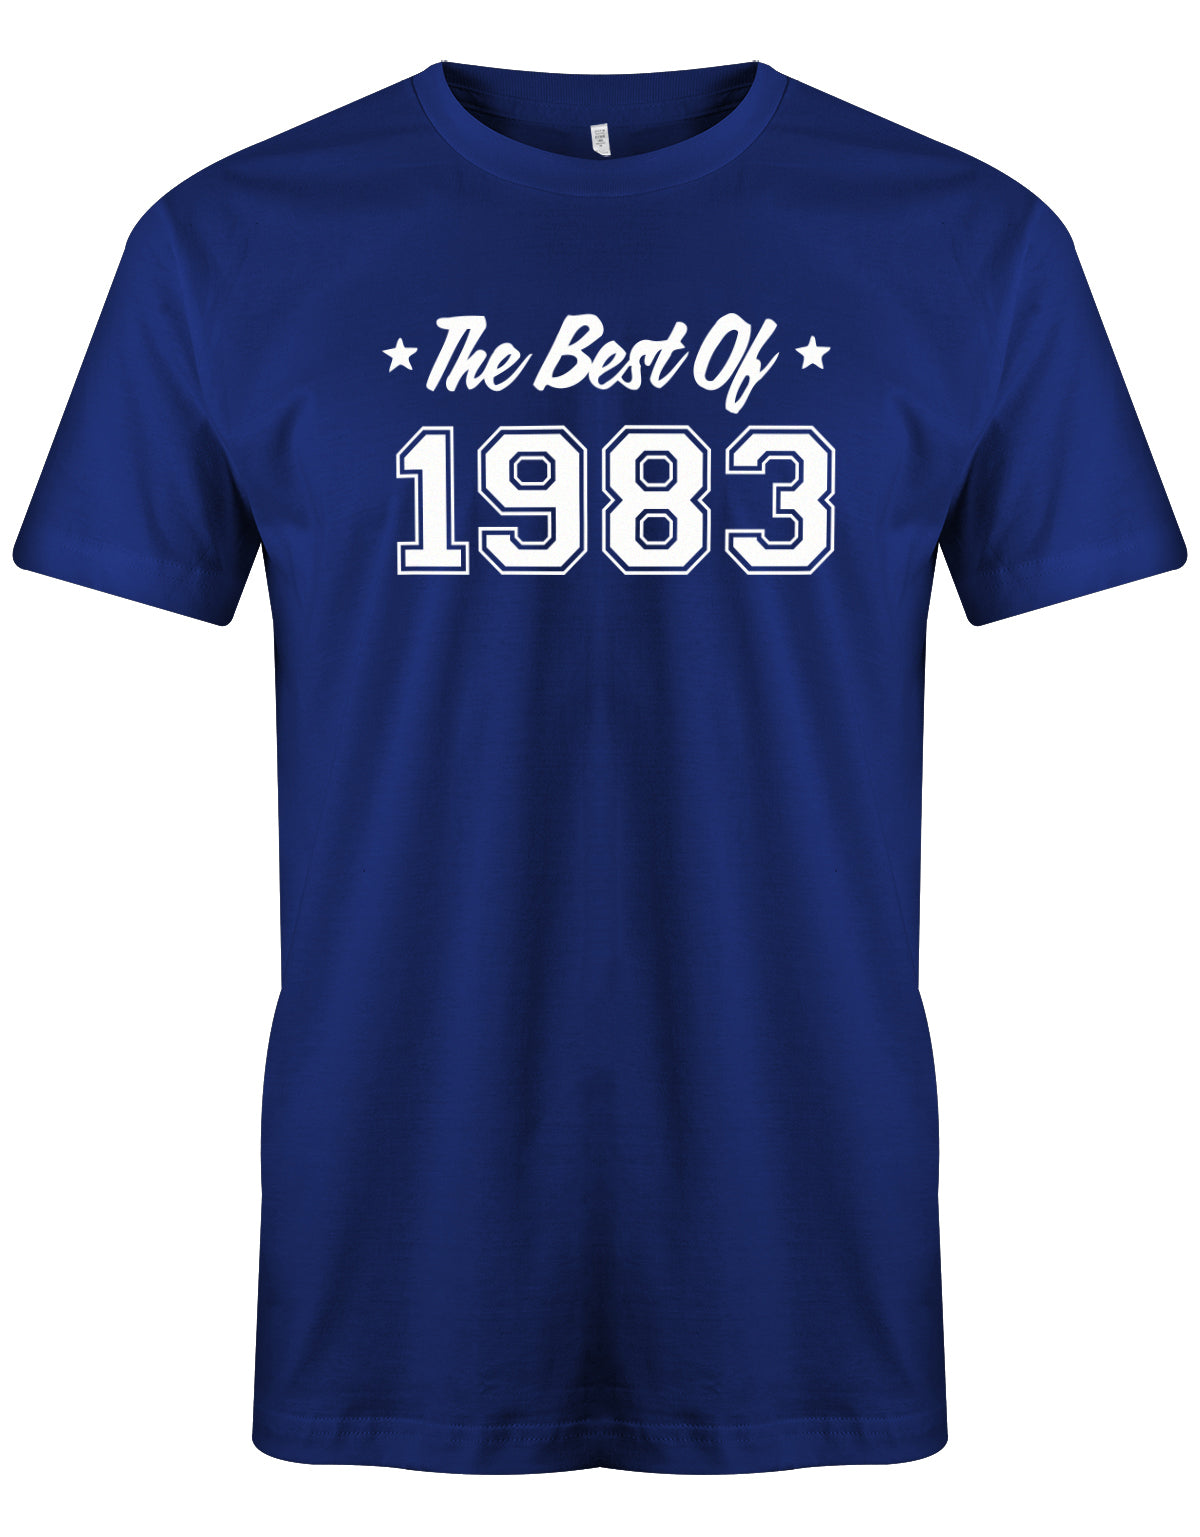 The best of 1983 - T-Shirt 40 Geburtstag Männer - Jahrgang 1983 TShirt  Royalblau